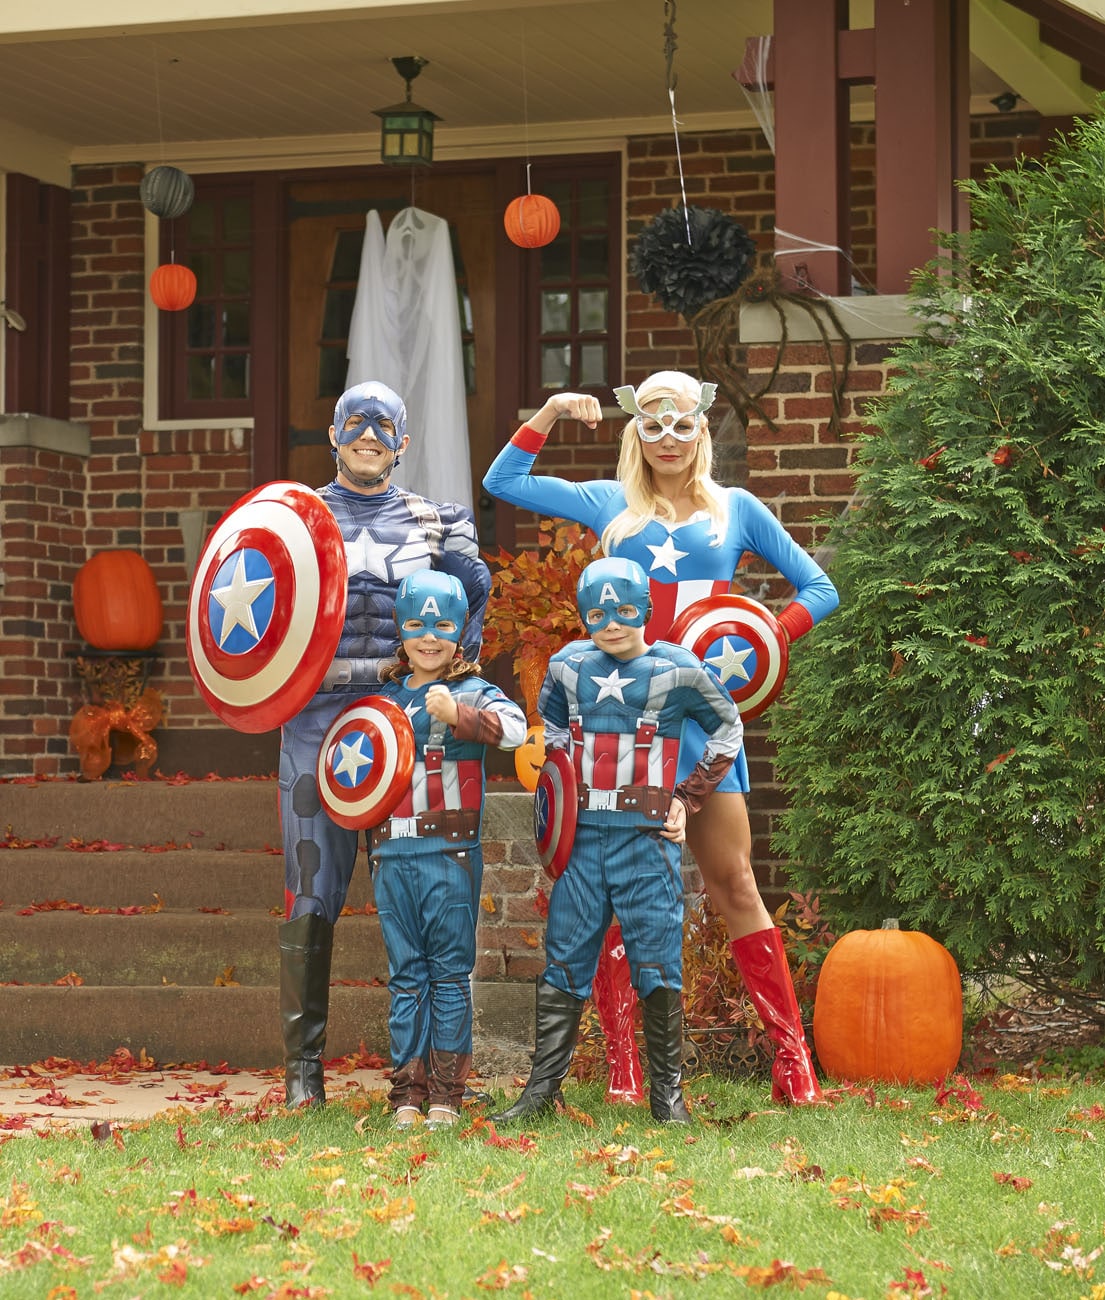 Captain America costumed family